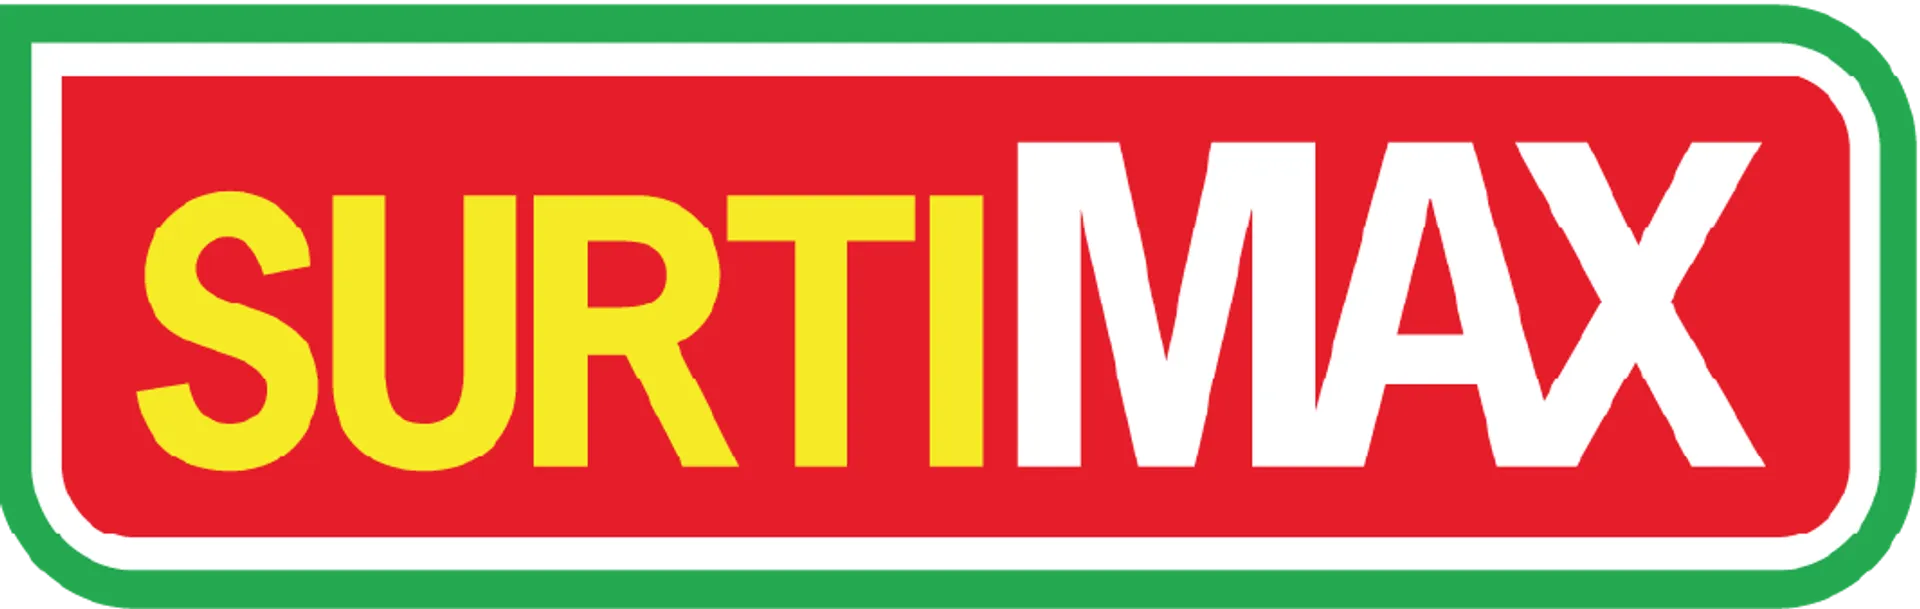 SURTIMAX logo